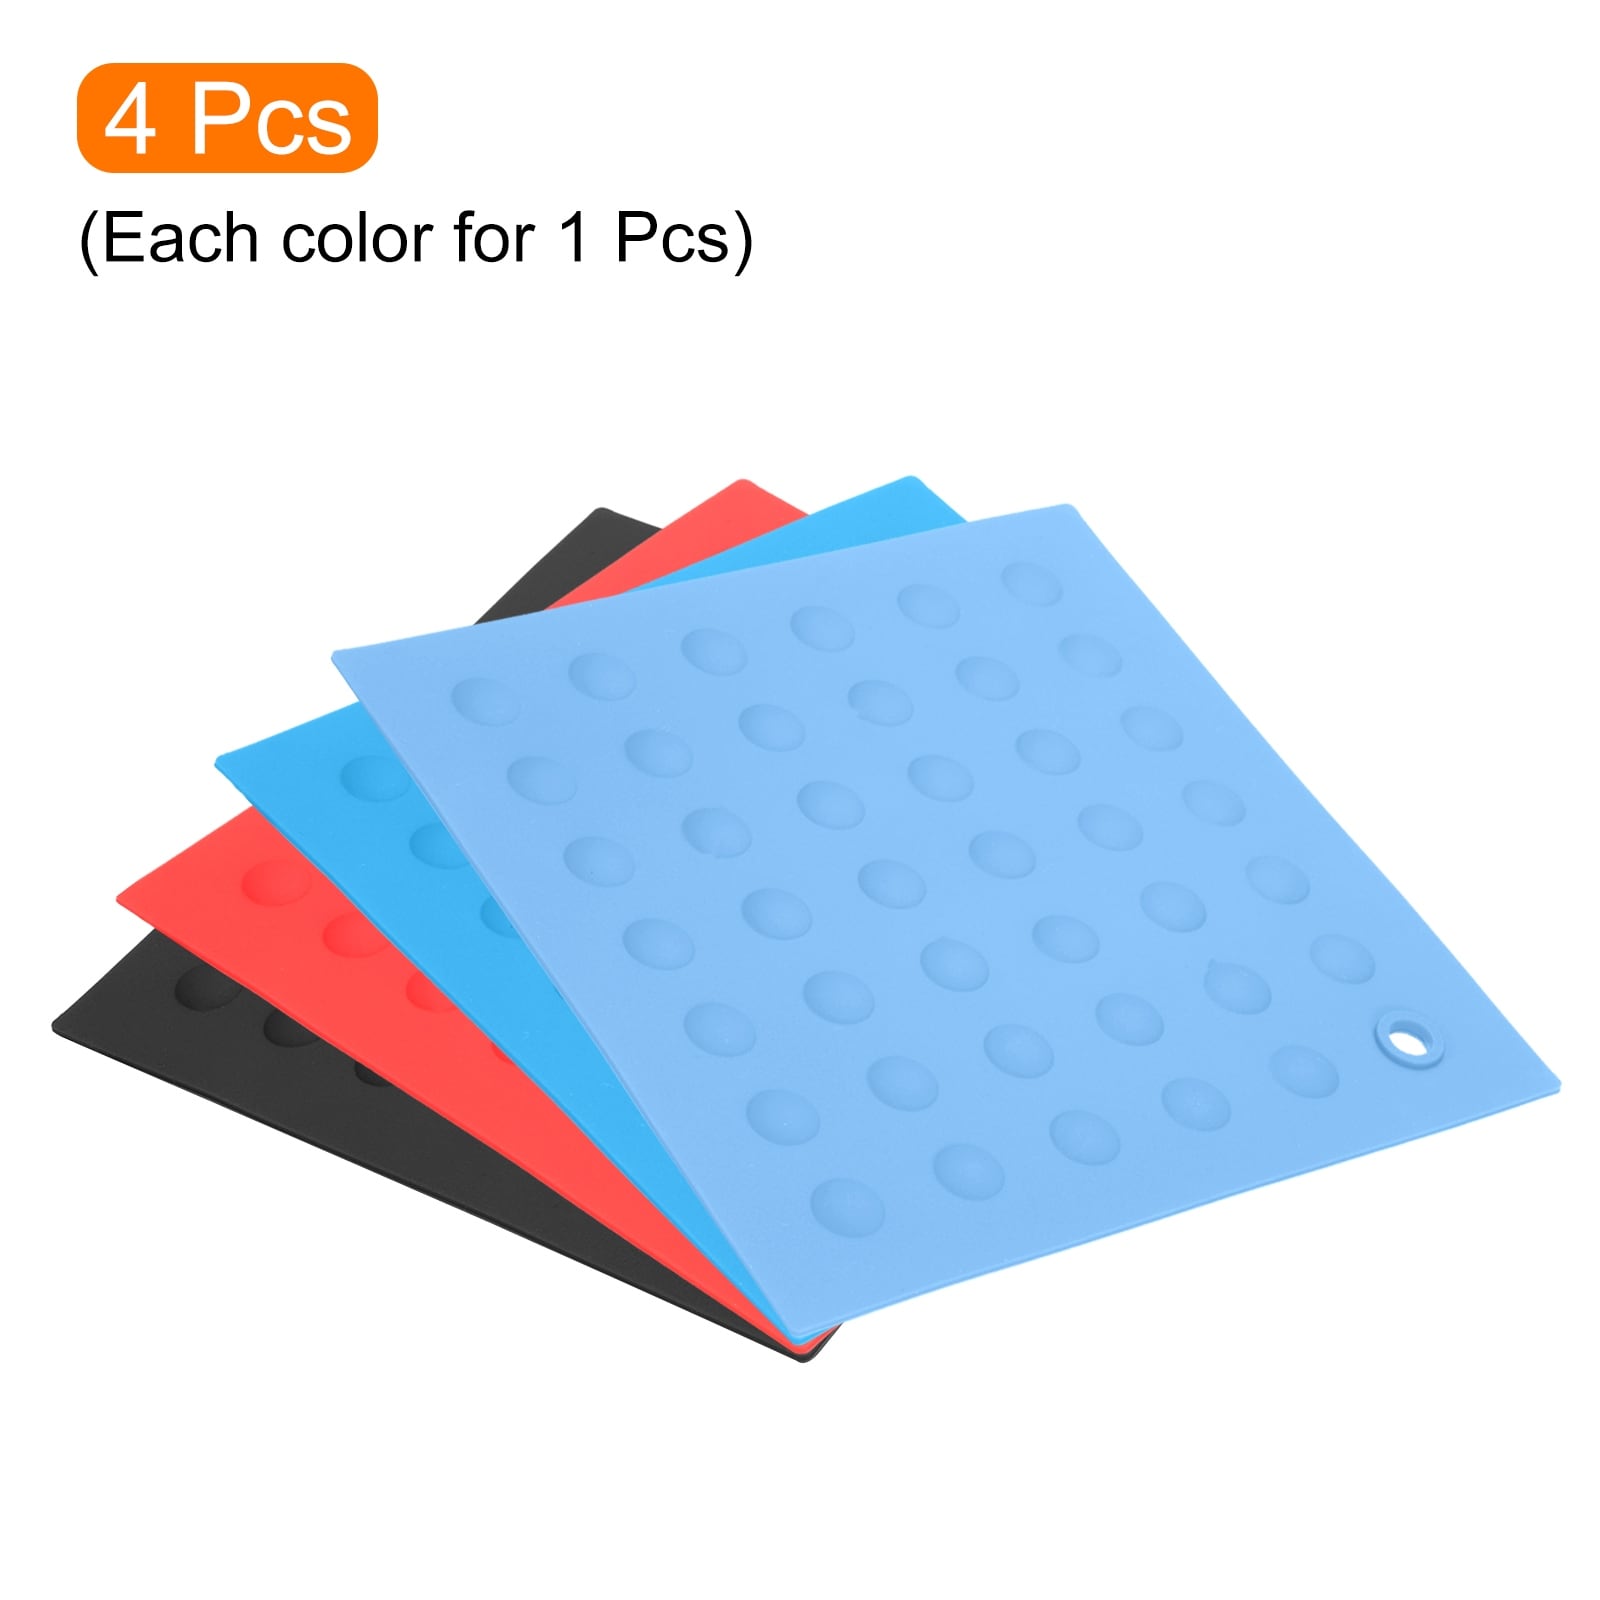 4pcs Silicone Trivet Mat Counter Protector-Black/Red/Blue/Light Blue -  Black/Red/Blue/Light Blue - Bed Bath & Beyond - 36326890